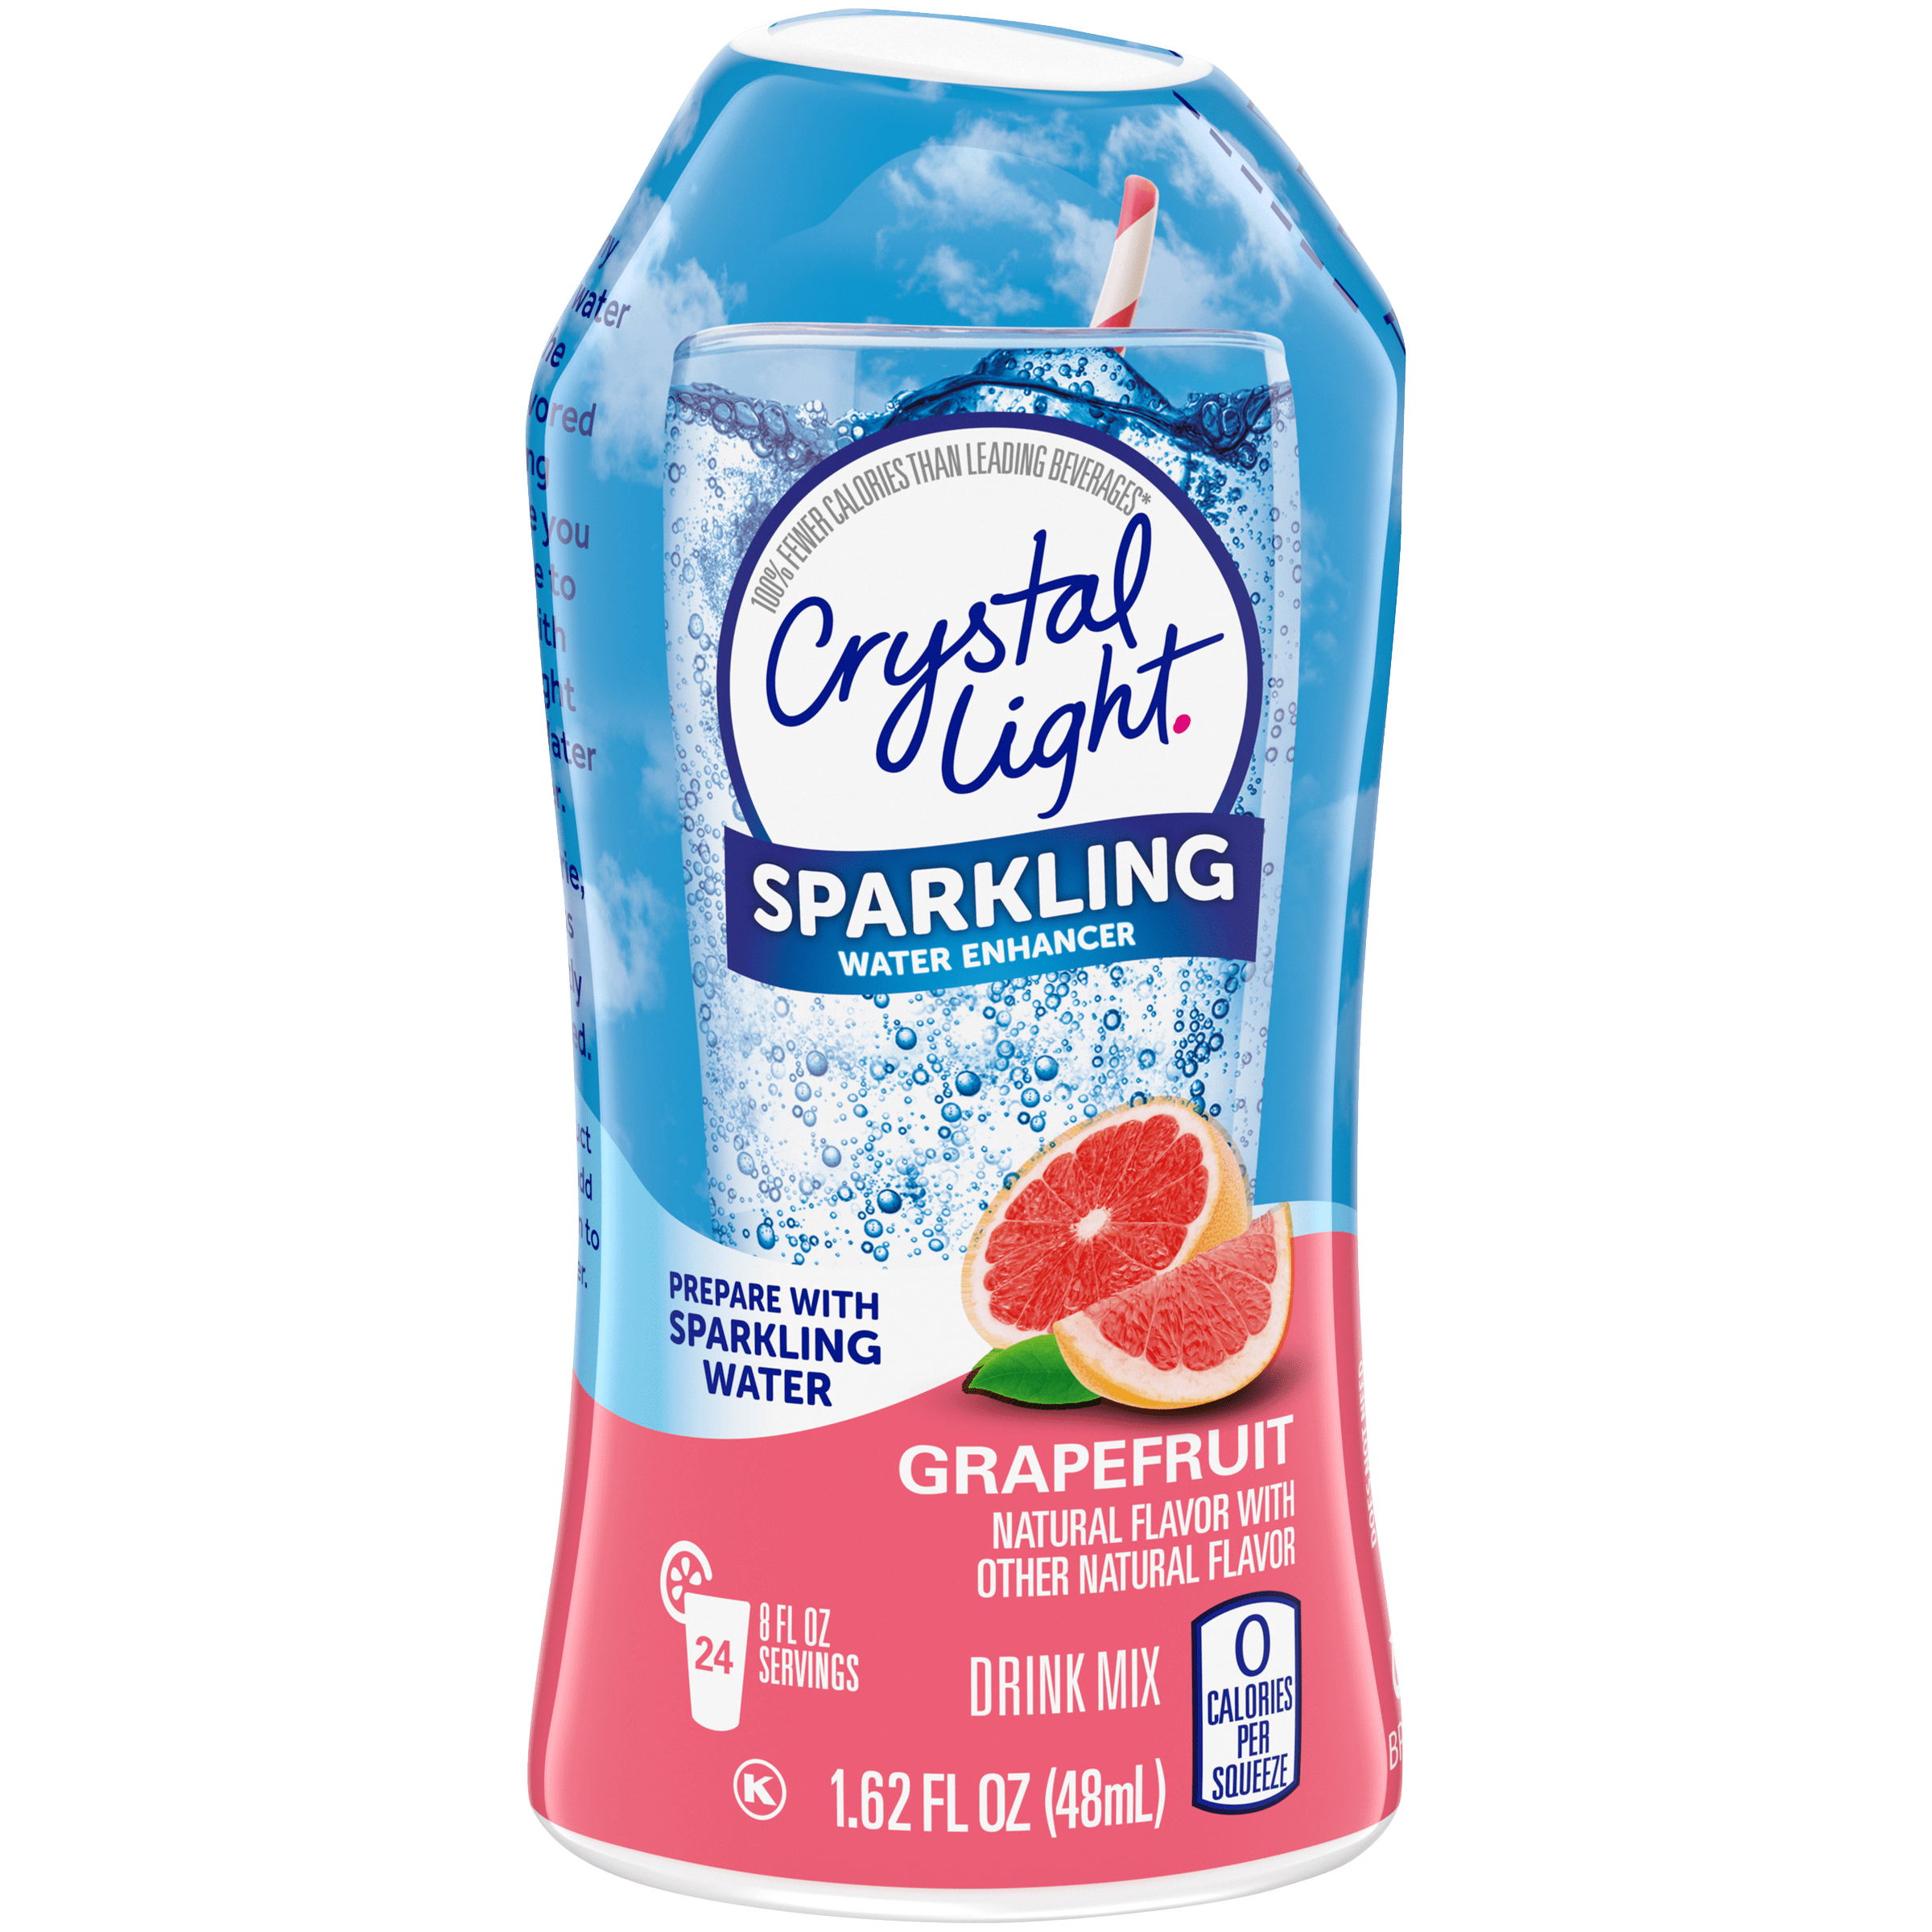 Grapefruit Naturally Flavored Sparkling Water Enhancer Drink Mix